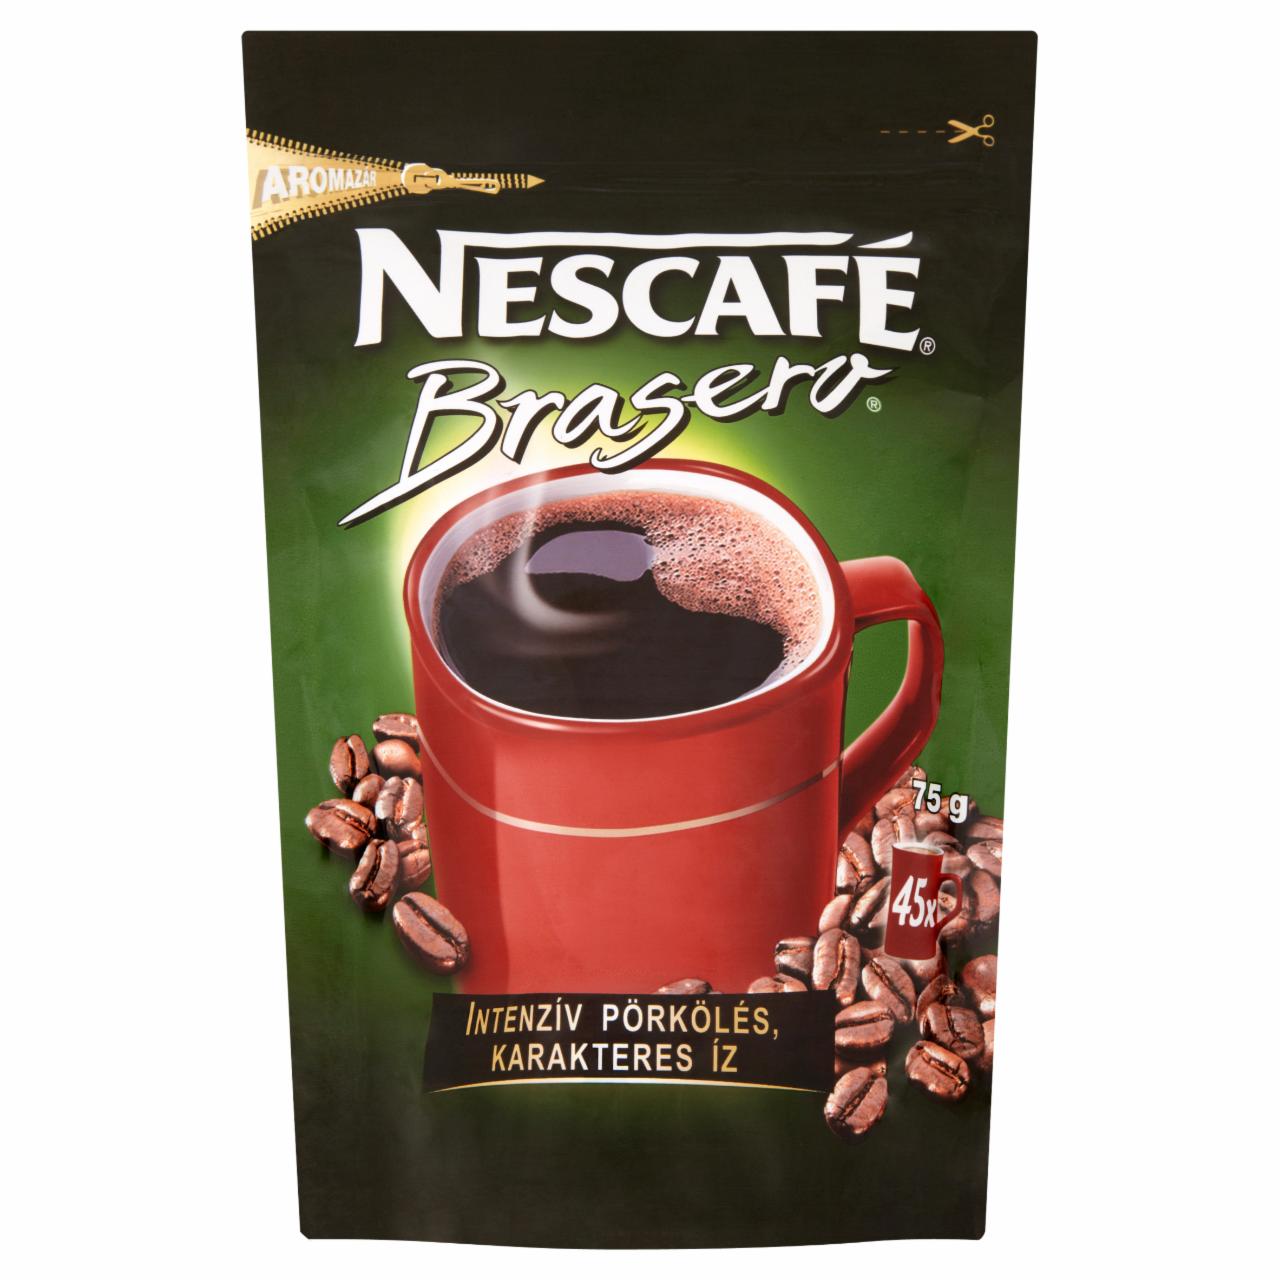 Képek - Nescafé Brasero azonnal oldódó kávé 200 g